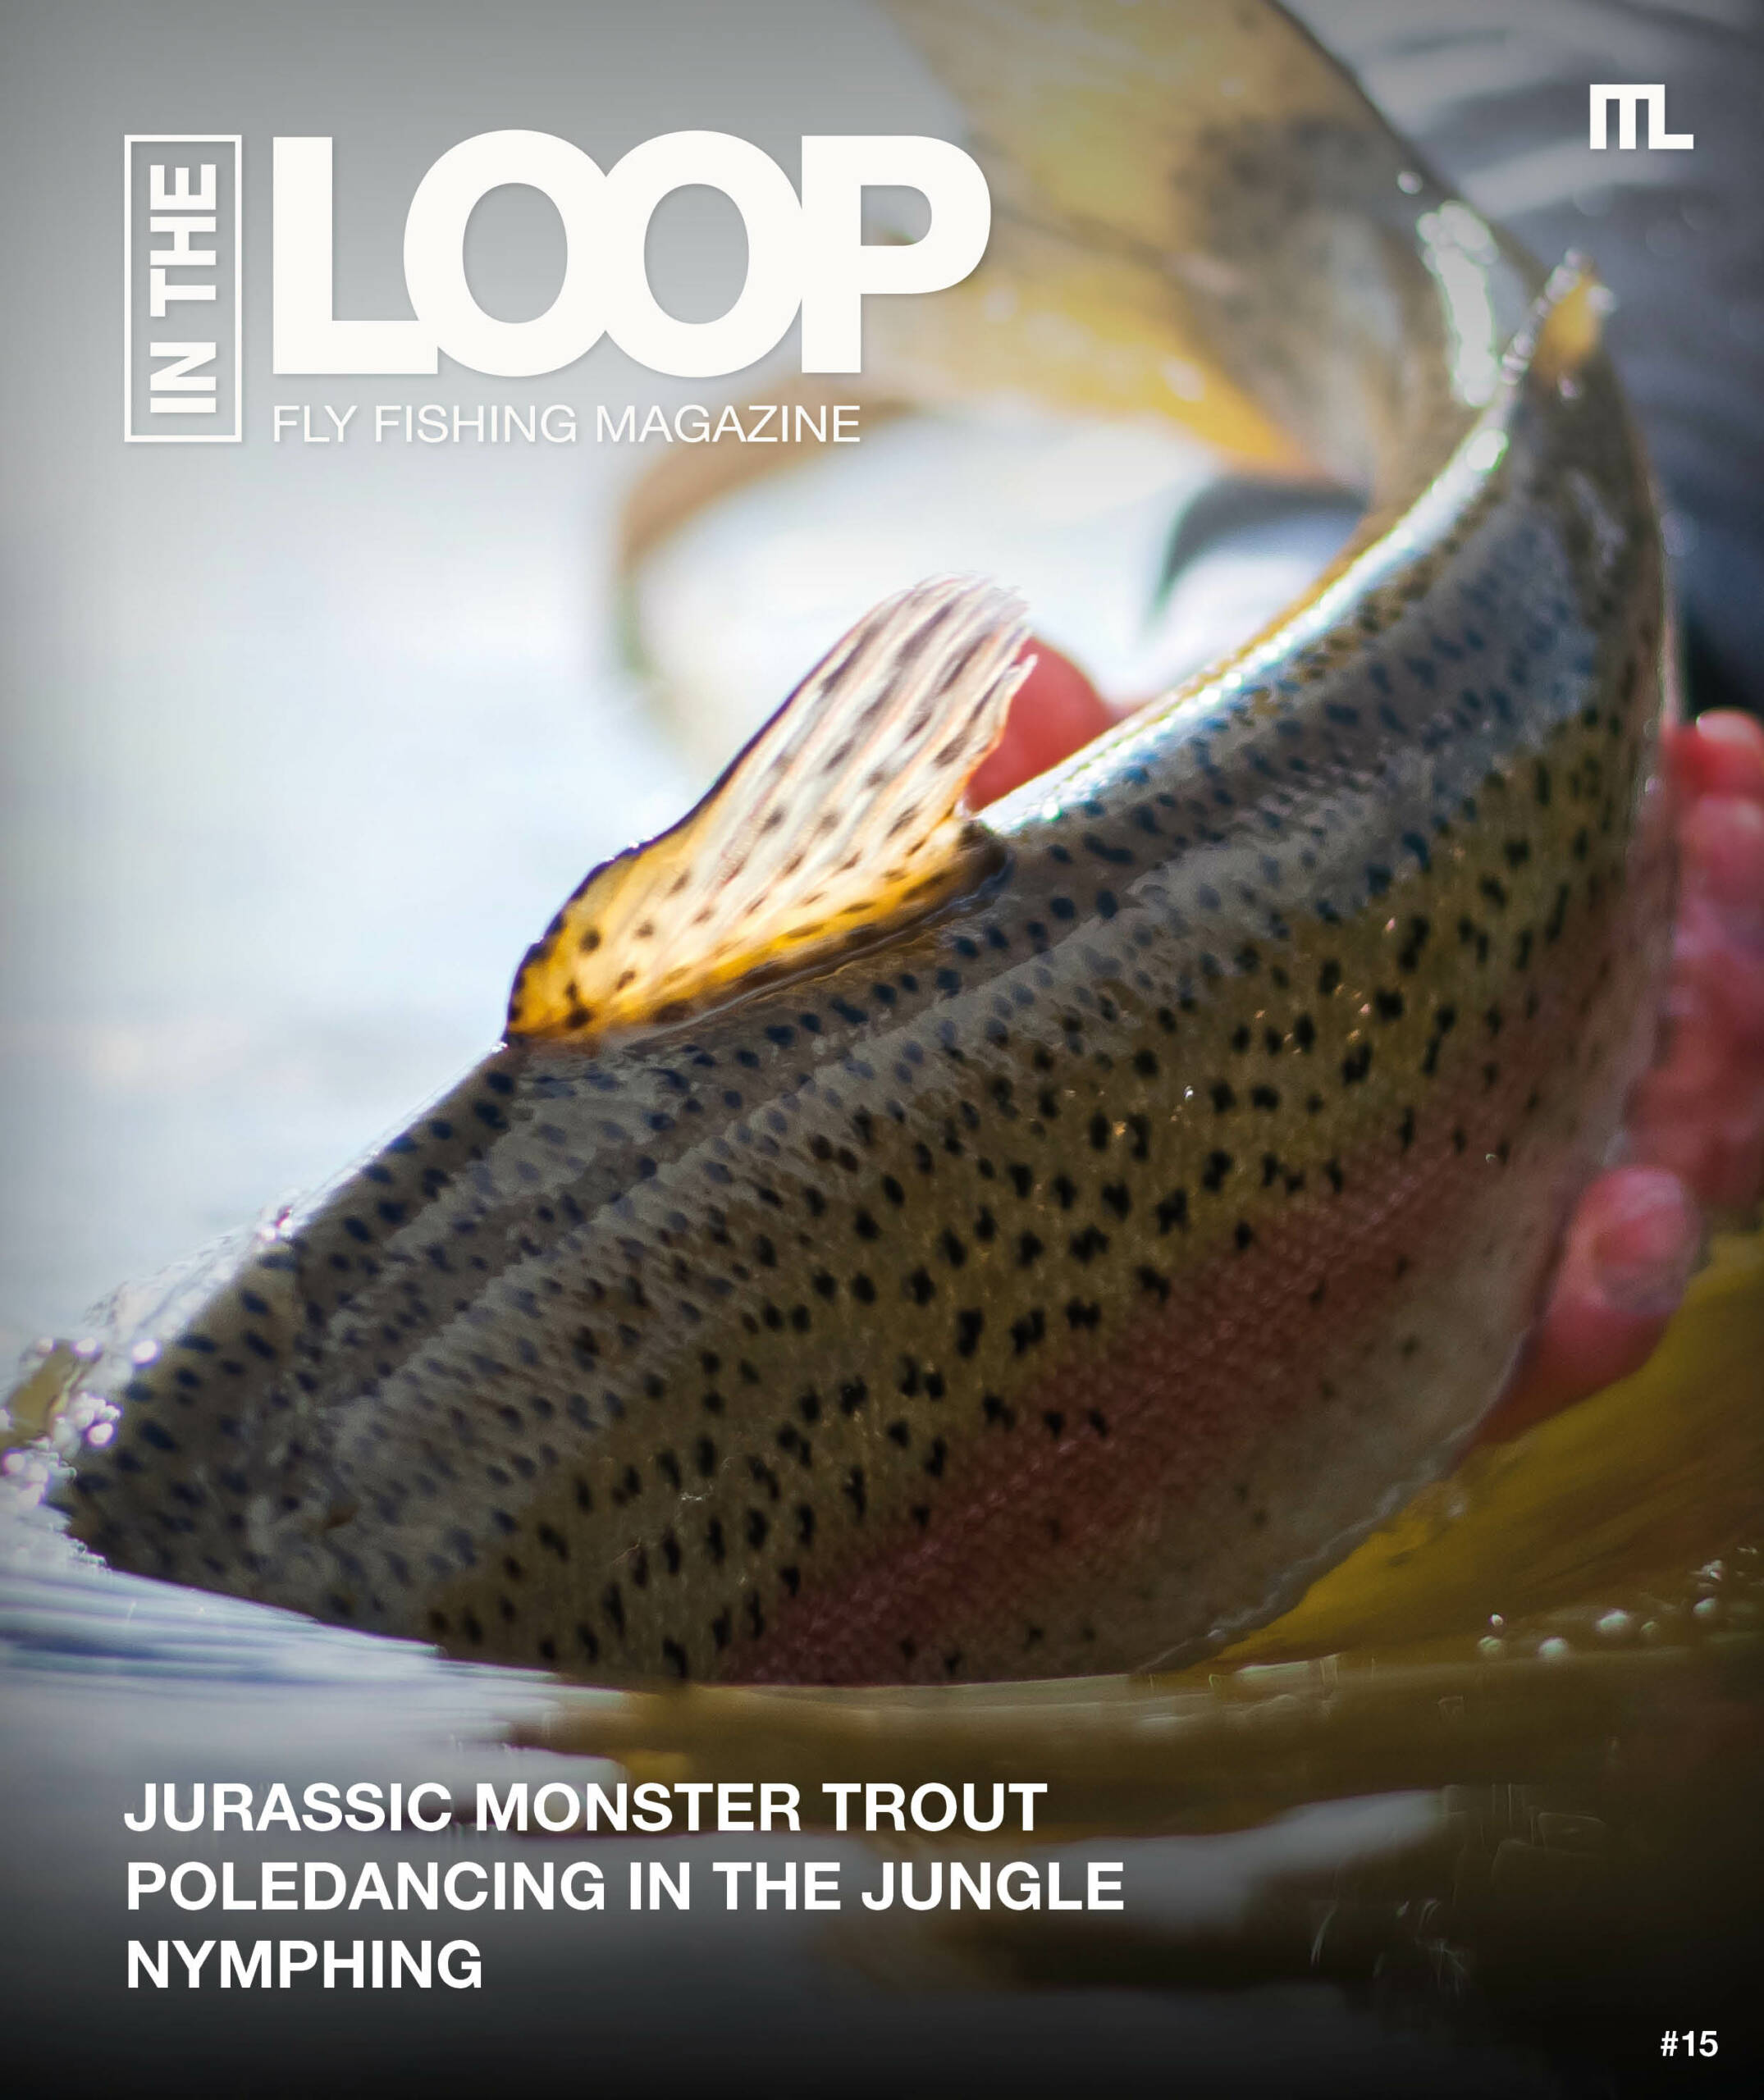 Magazine – In the Loop Magazine